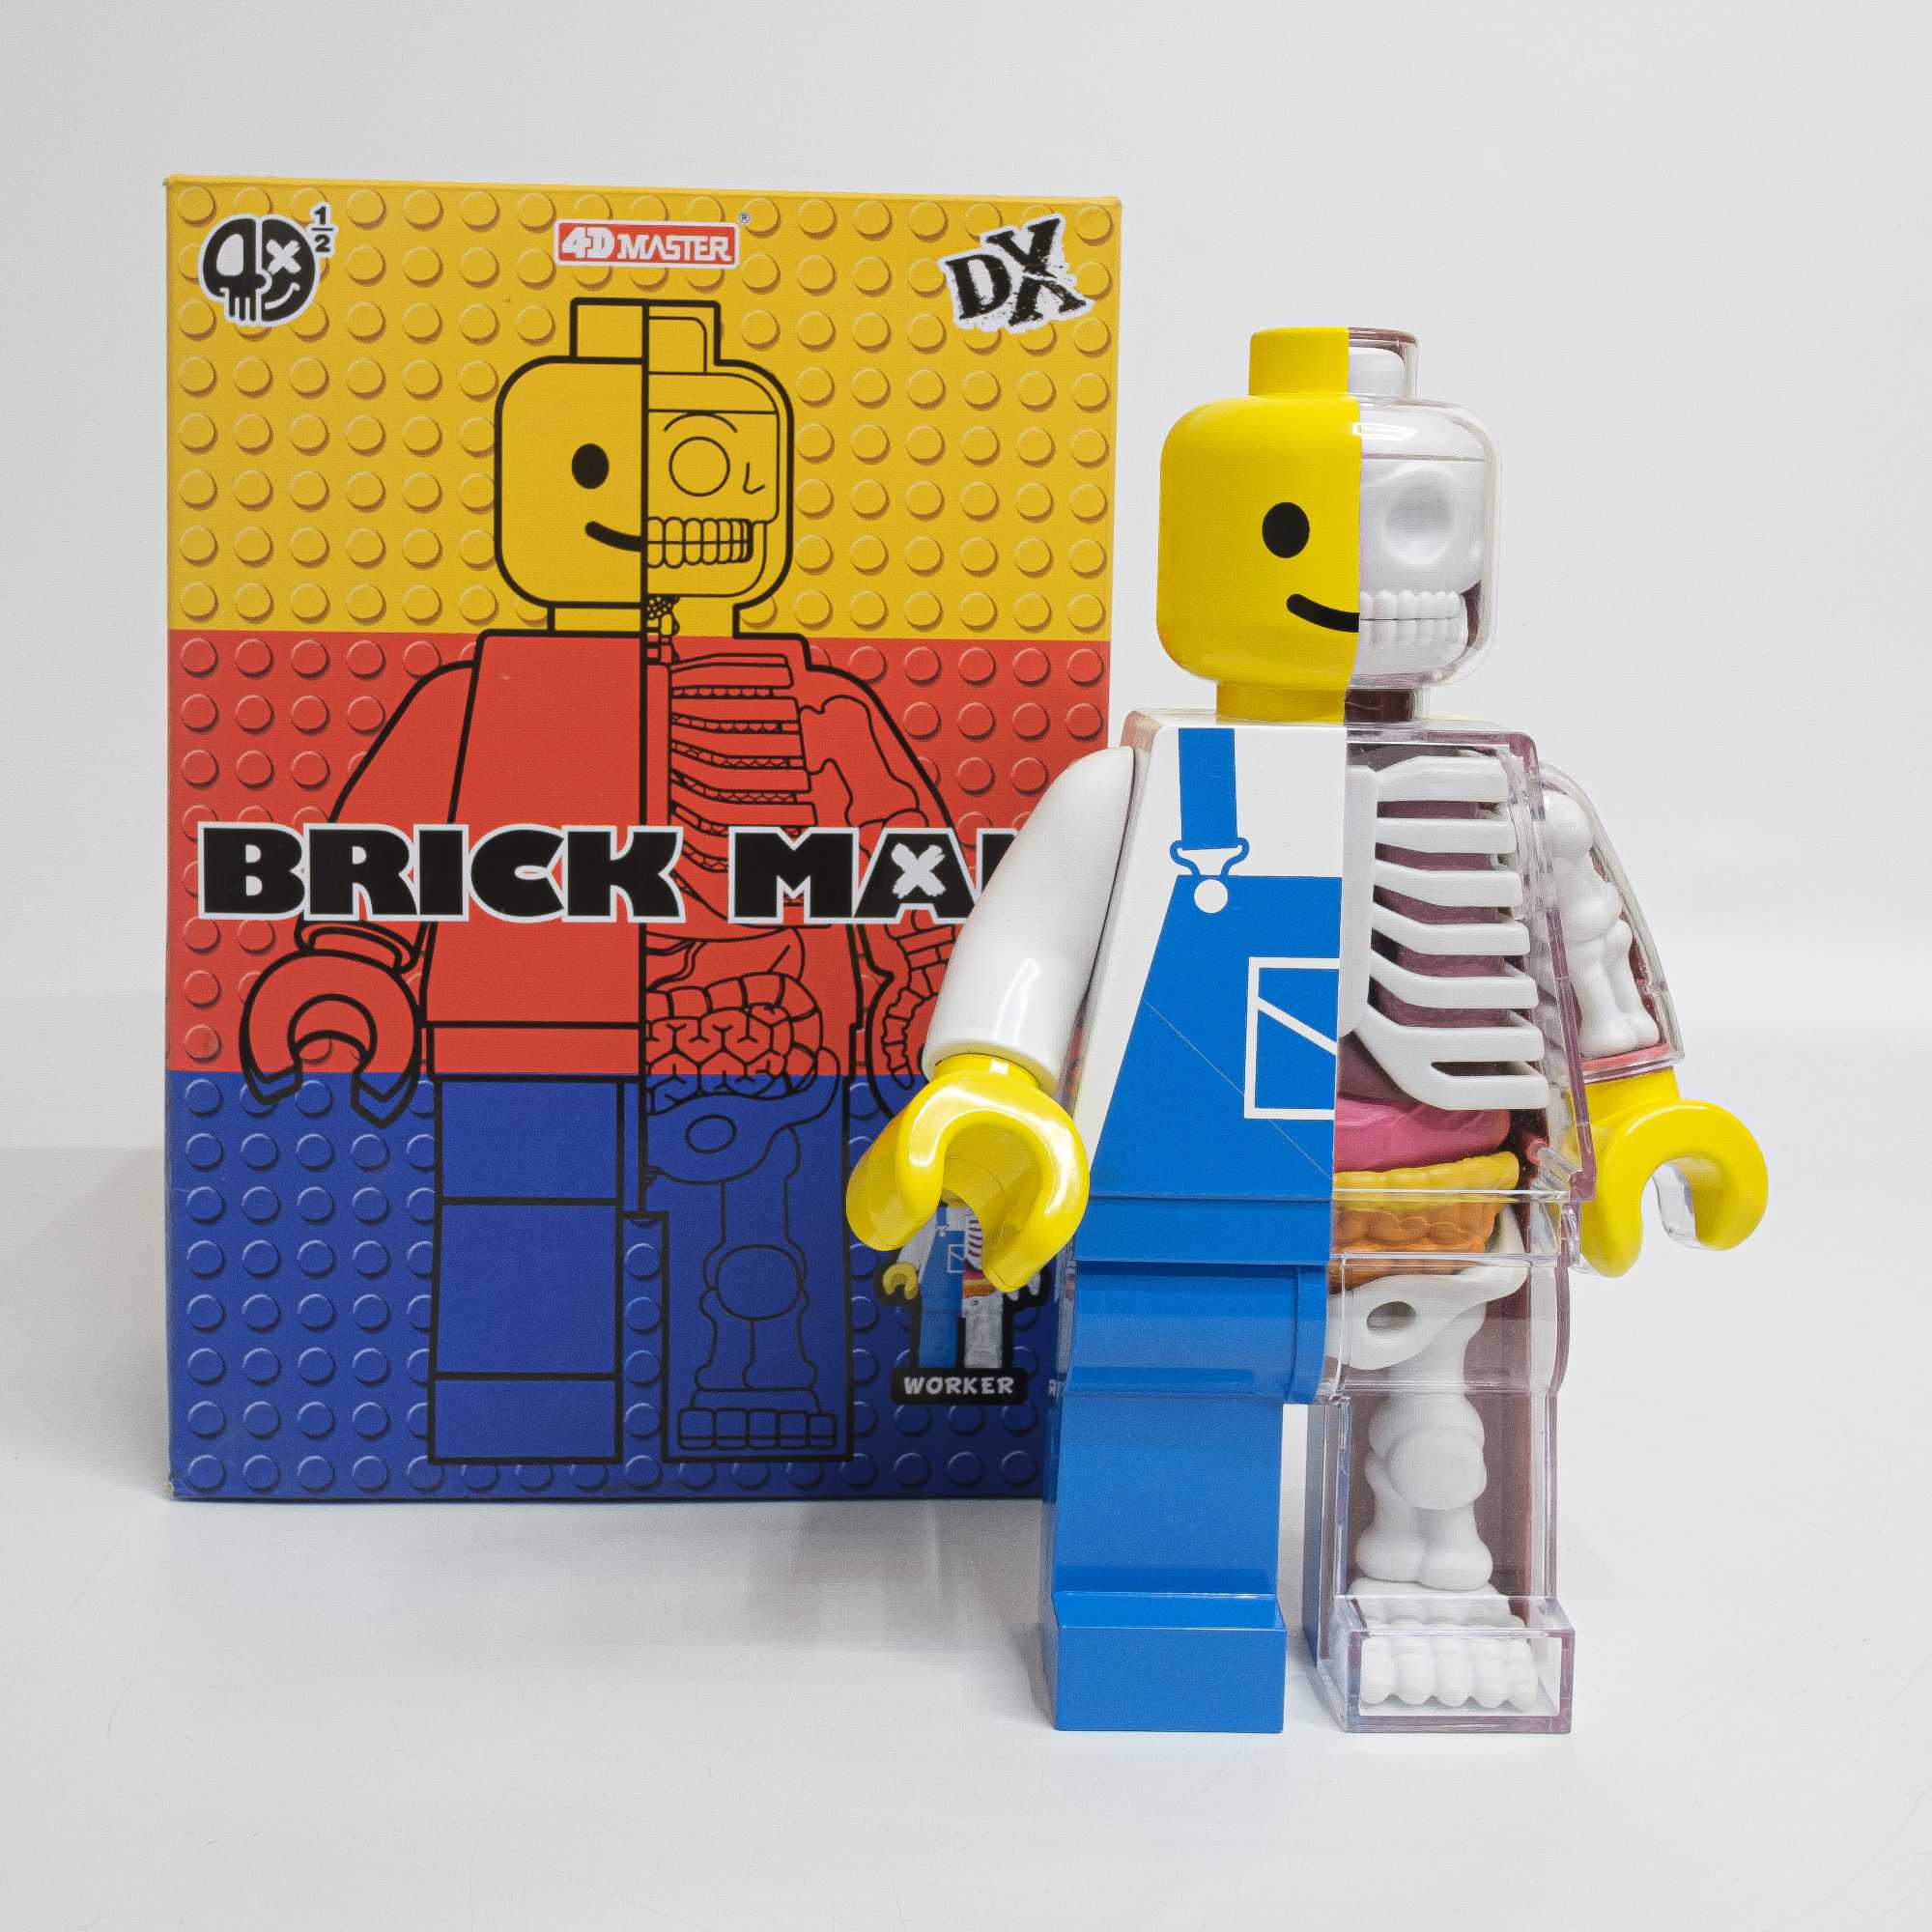 ex-display | Fame Master Brick Man anatomy figure, worker